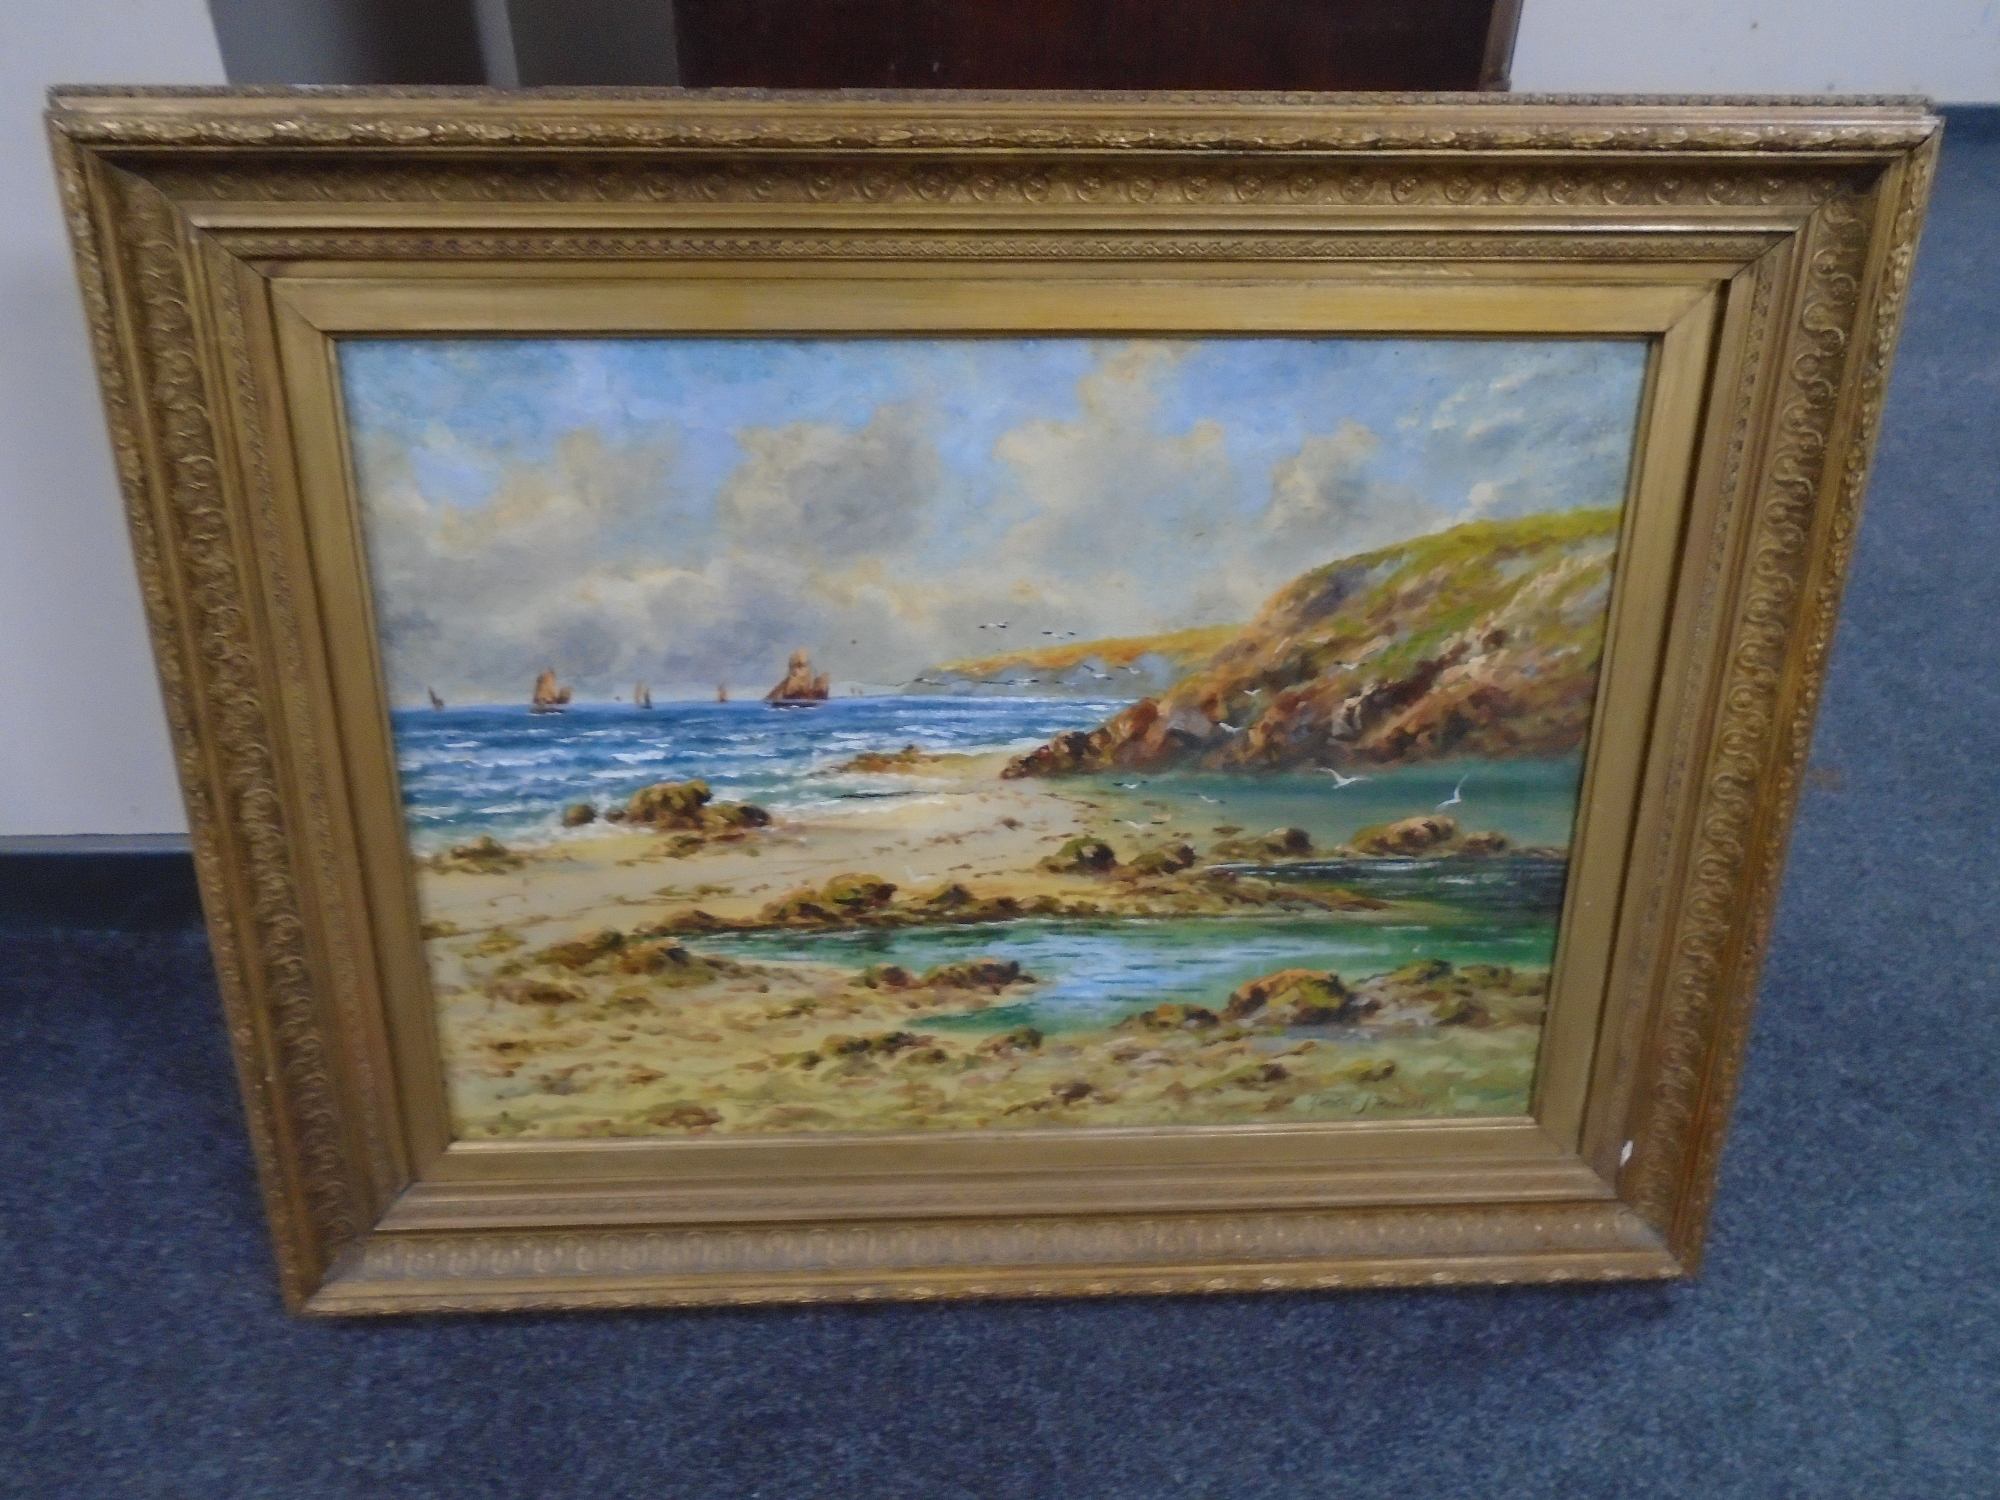 Robert J Pollard II : Boats of a rocky coastline, oil-on-canvas, in gilt frame.